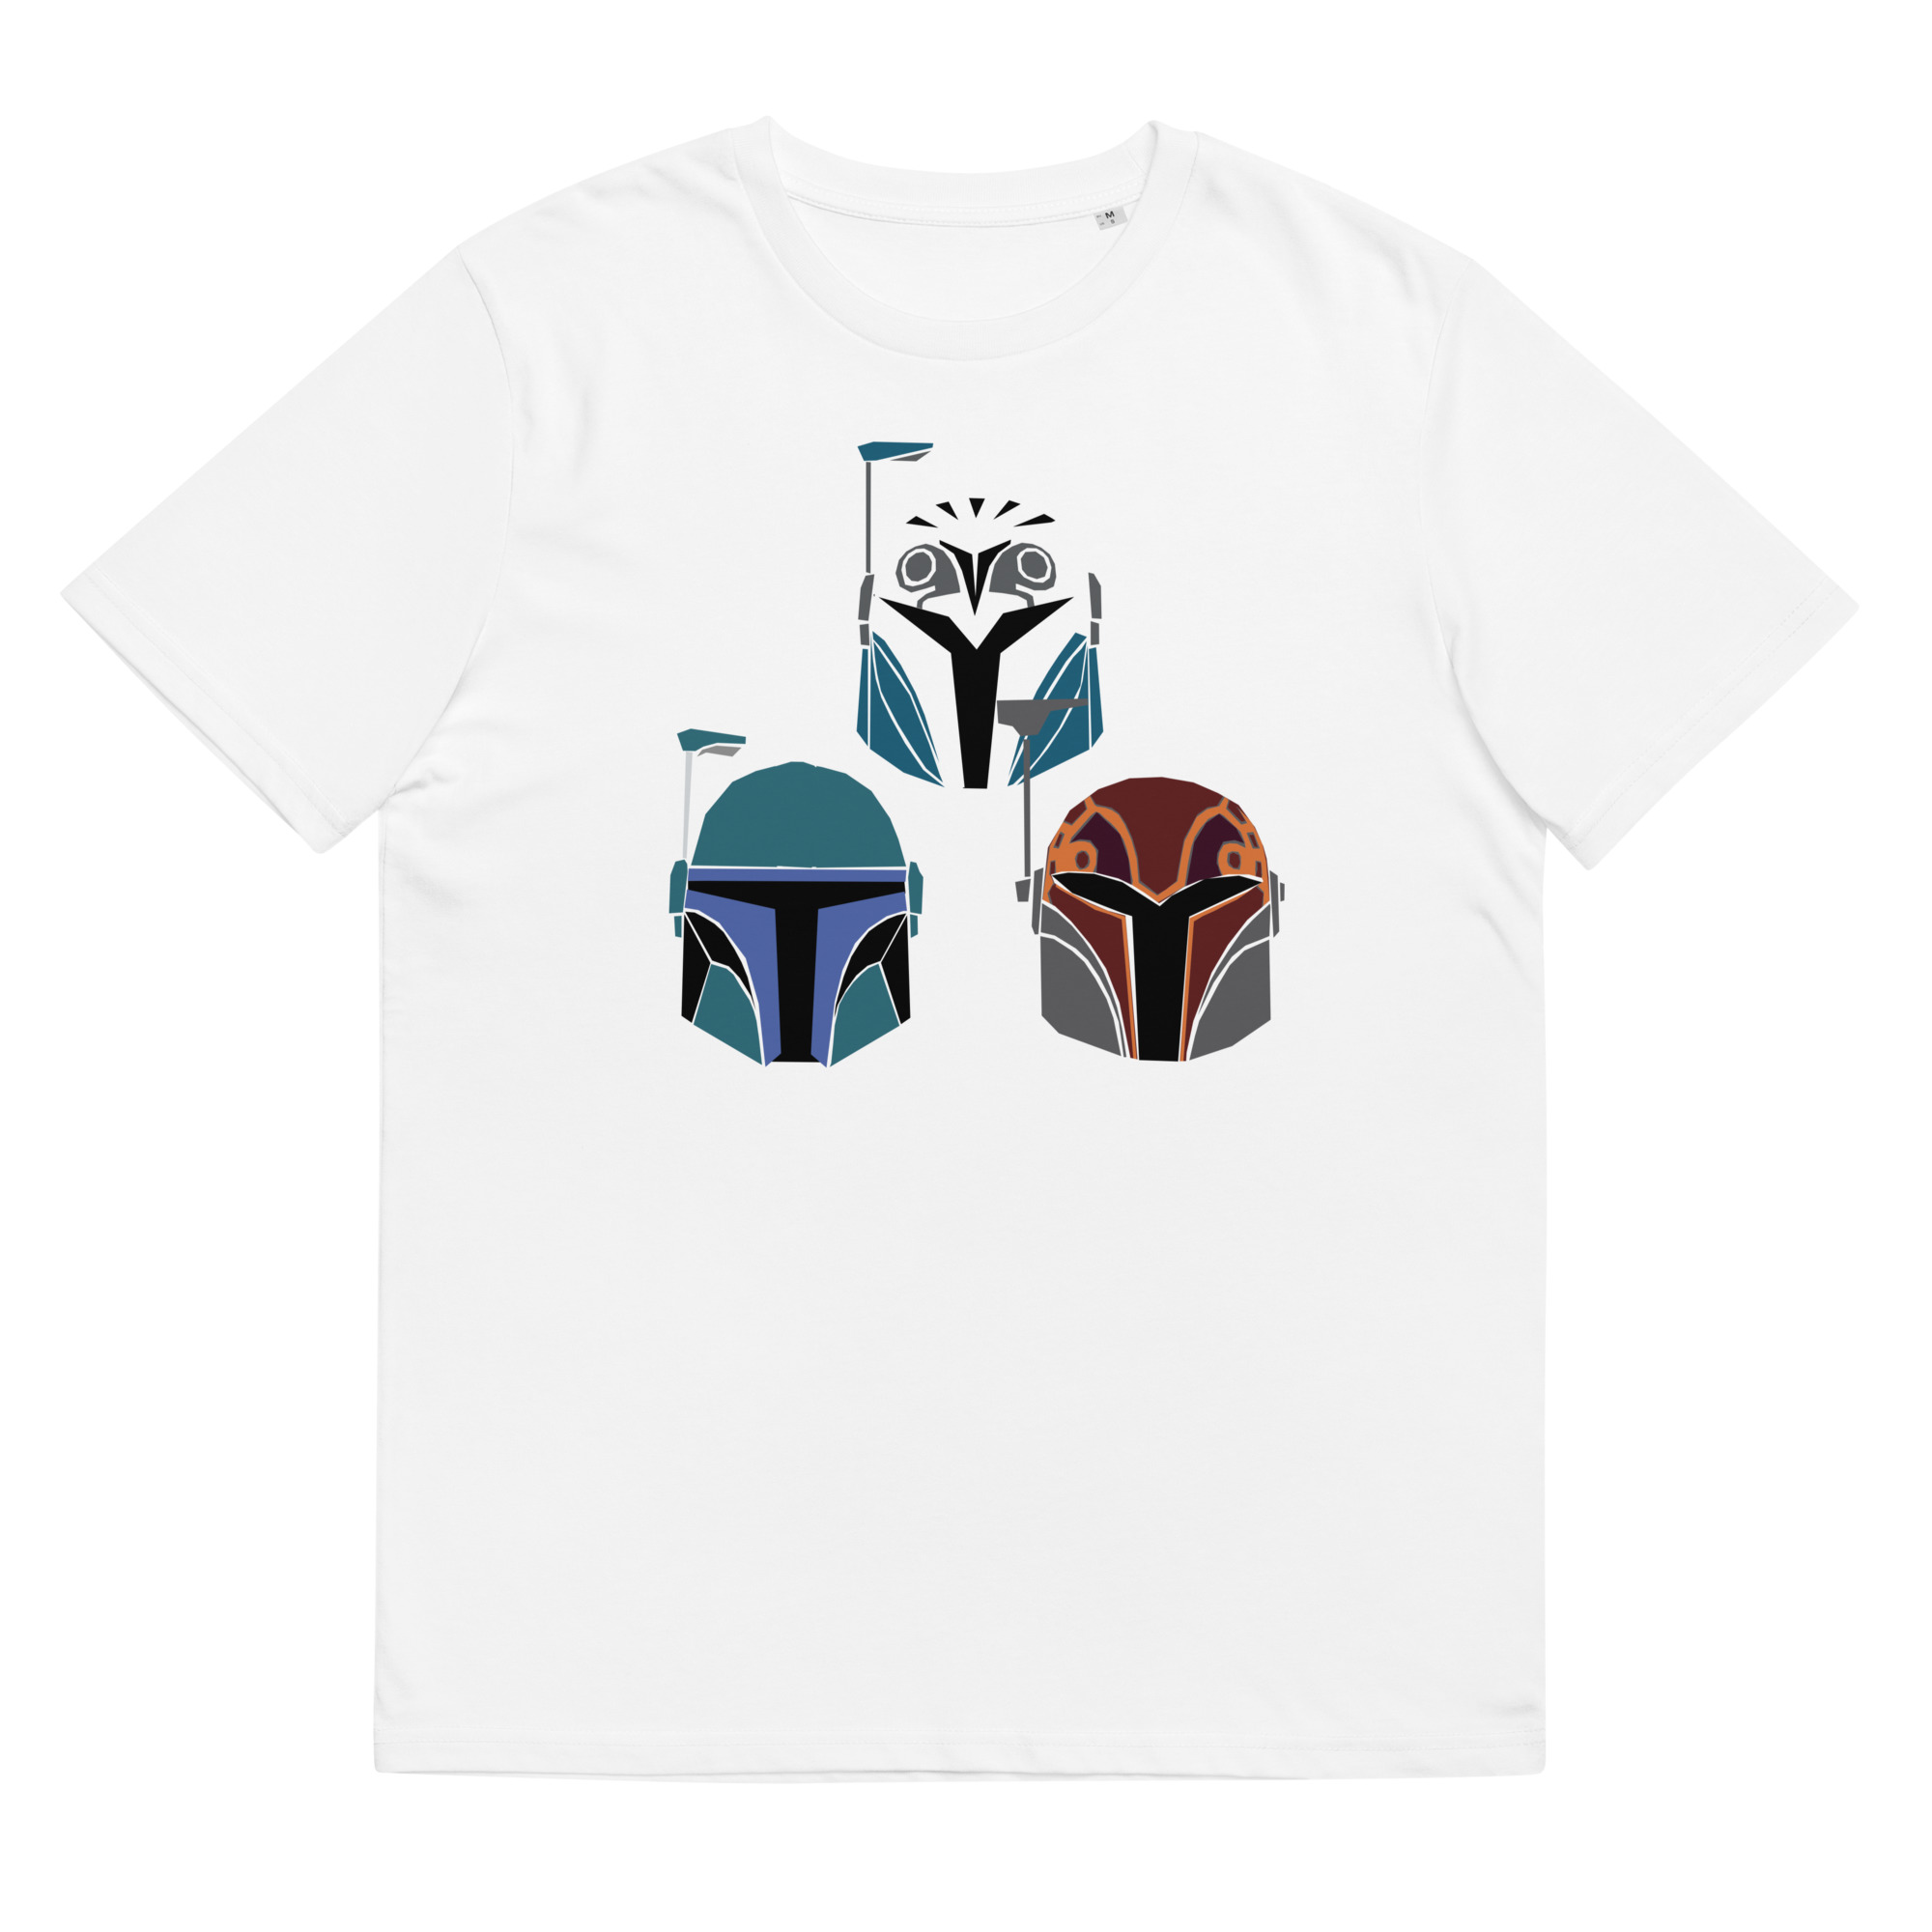 Mandalorian Factions Star Wars t shirts - Galactic Sabers